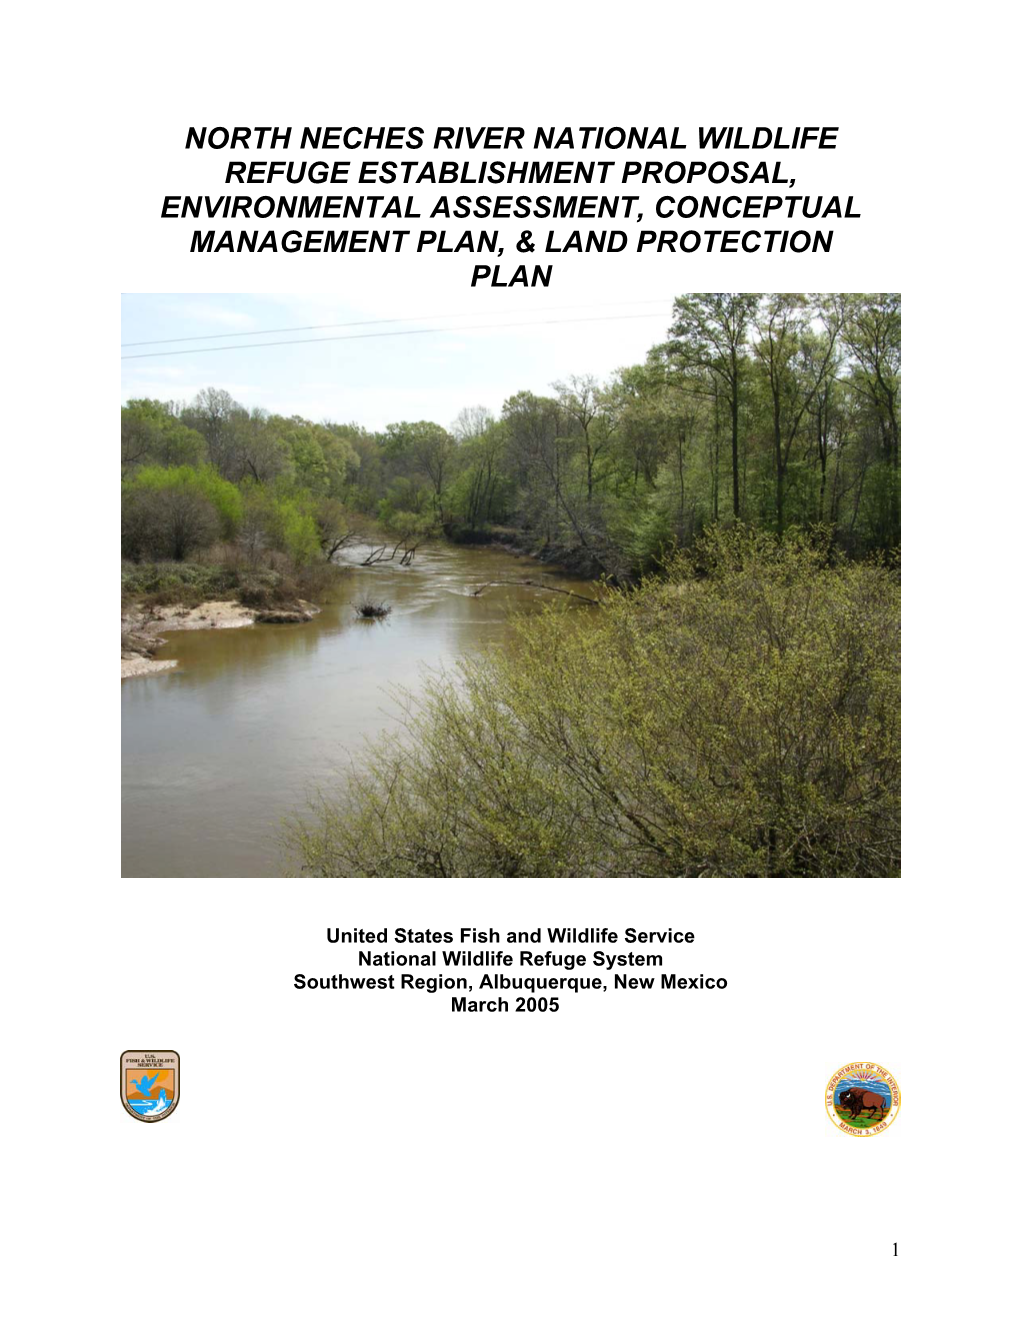 North Neches River National Wildlife Refuge Establishment Proposal, Environmental Assessment, Conceptual Management Plan, & Land Protection Plan